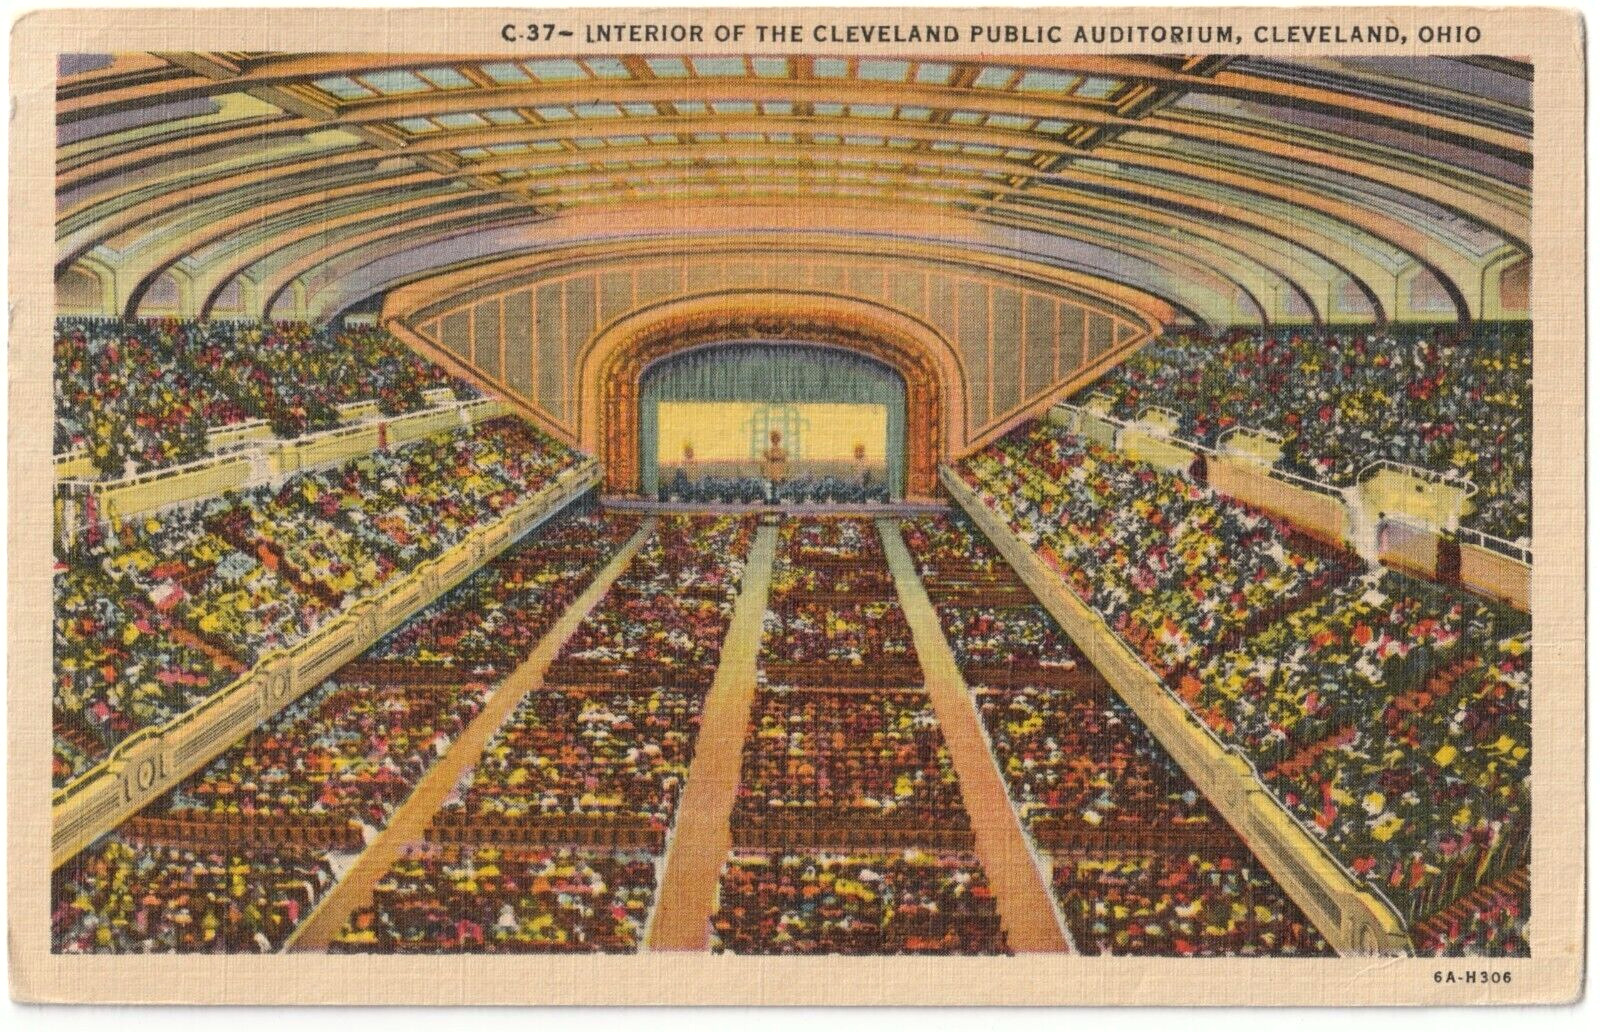 Interior of the Cleveland Public Auditorium-Cleveland, Ohio OH-1953 posted